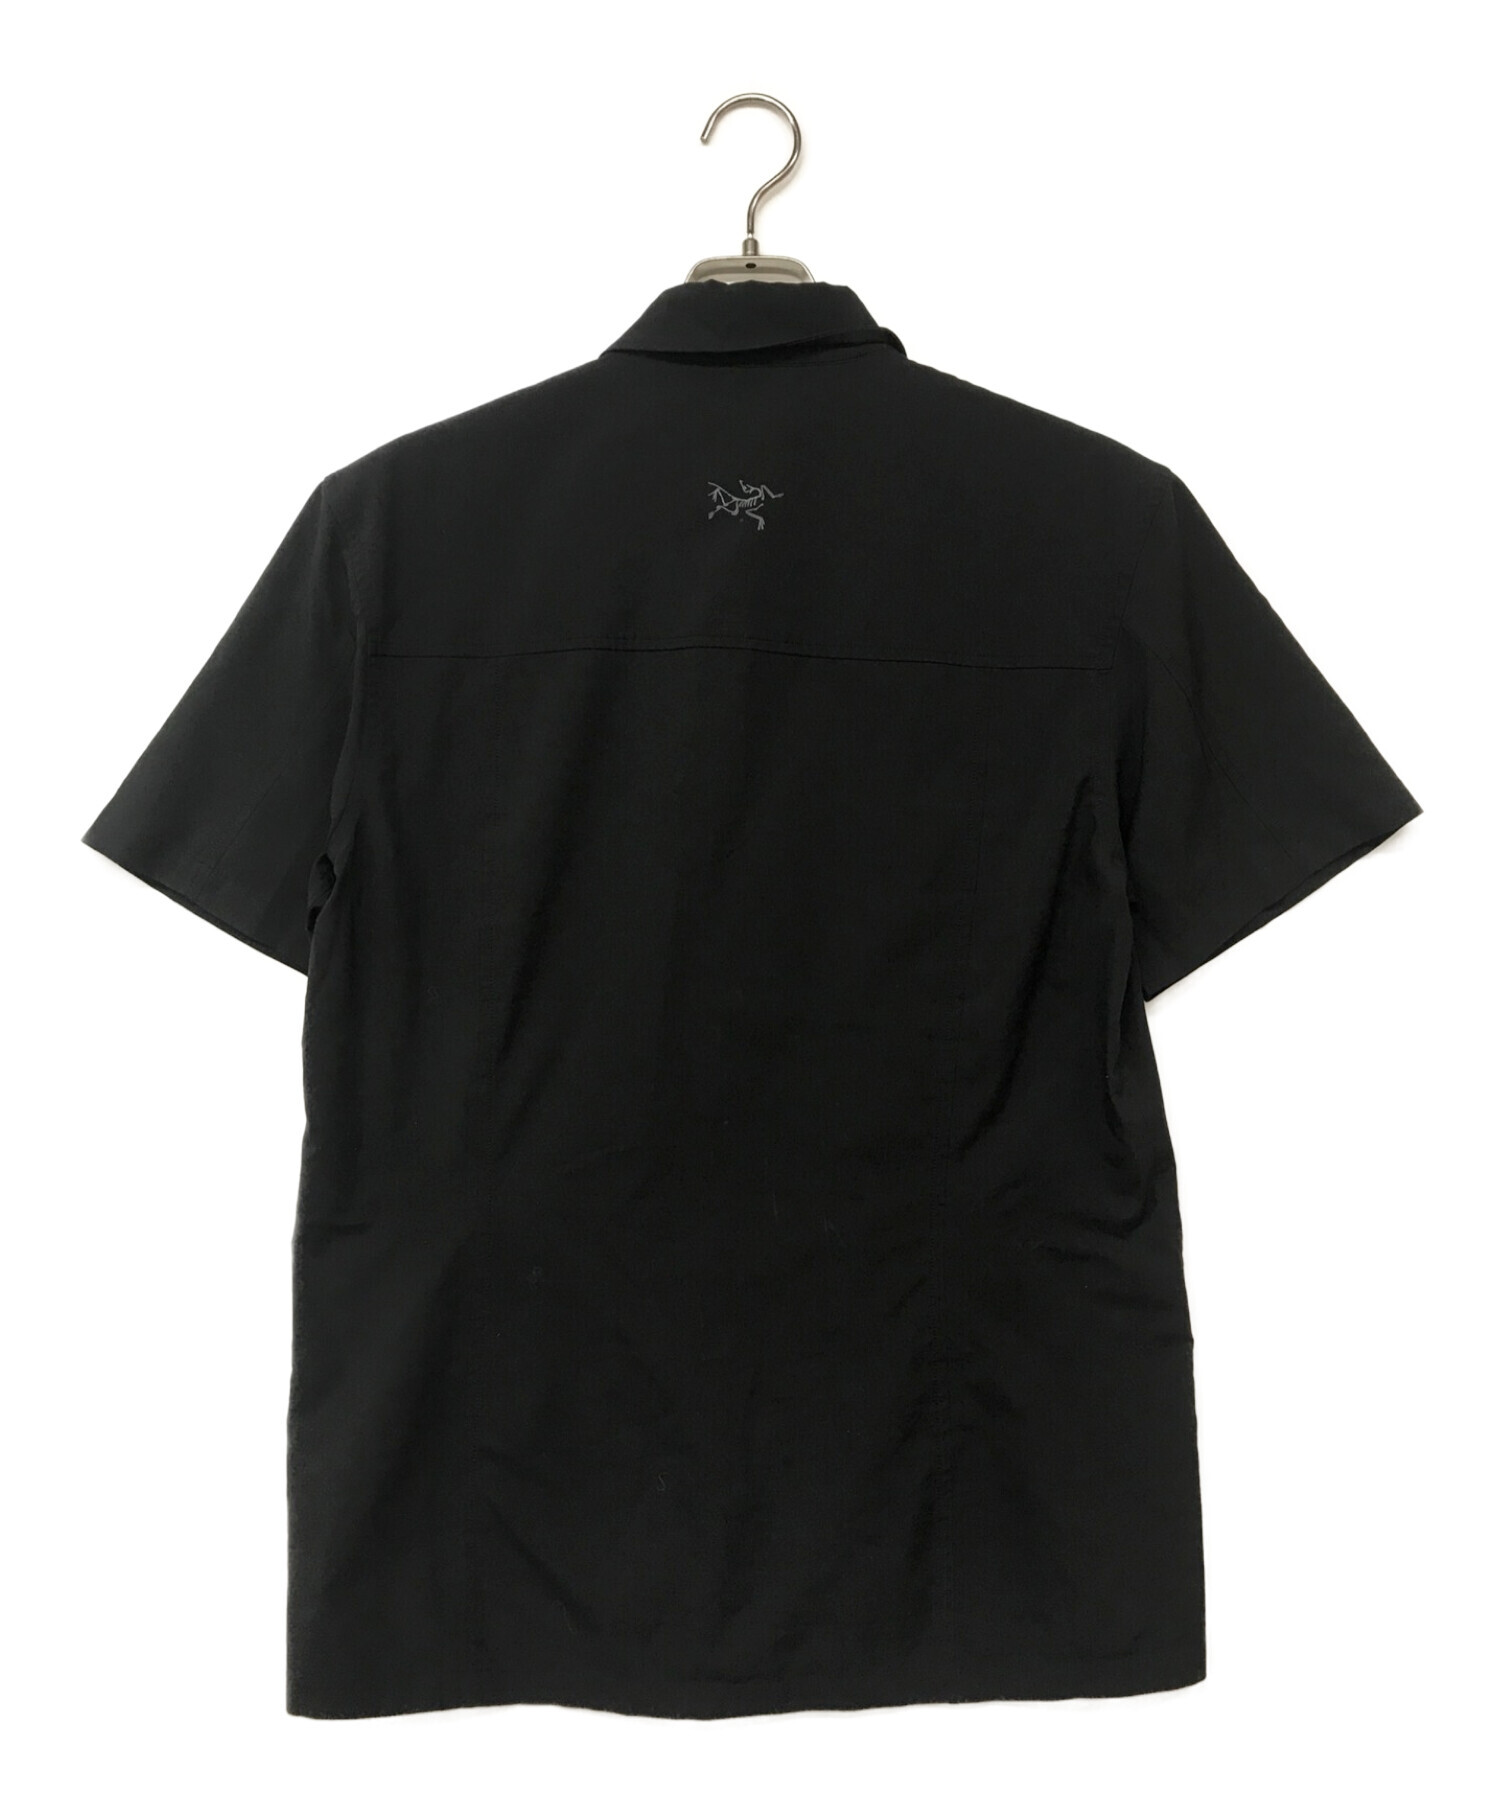 ARC'TERYX (アークテリクス) Skyline SS Shirt/スカイラインショートスリープシャツ ブラック サイズ:S